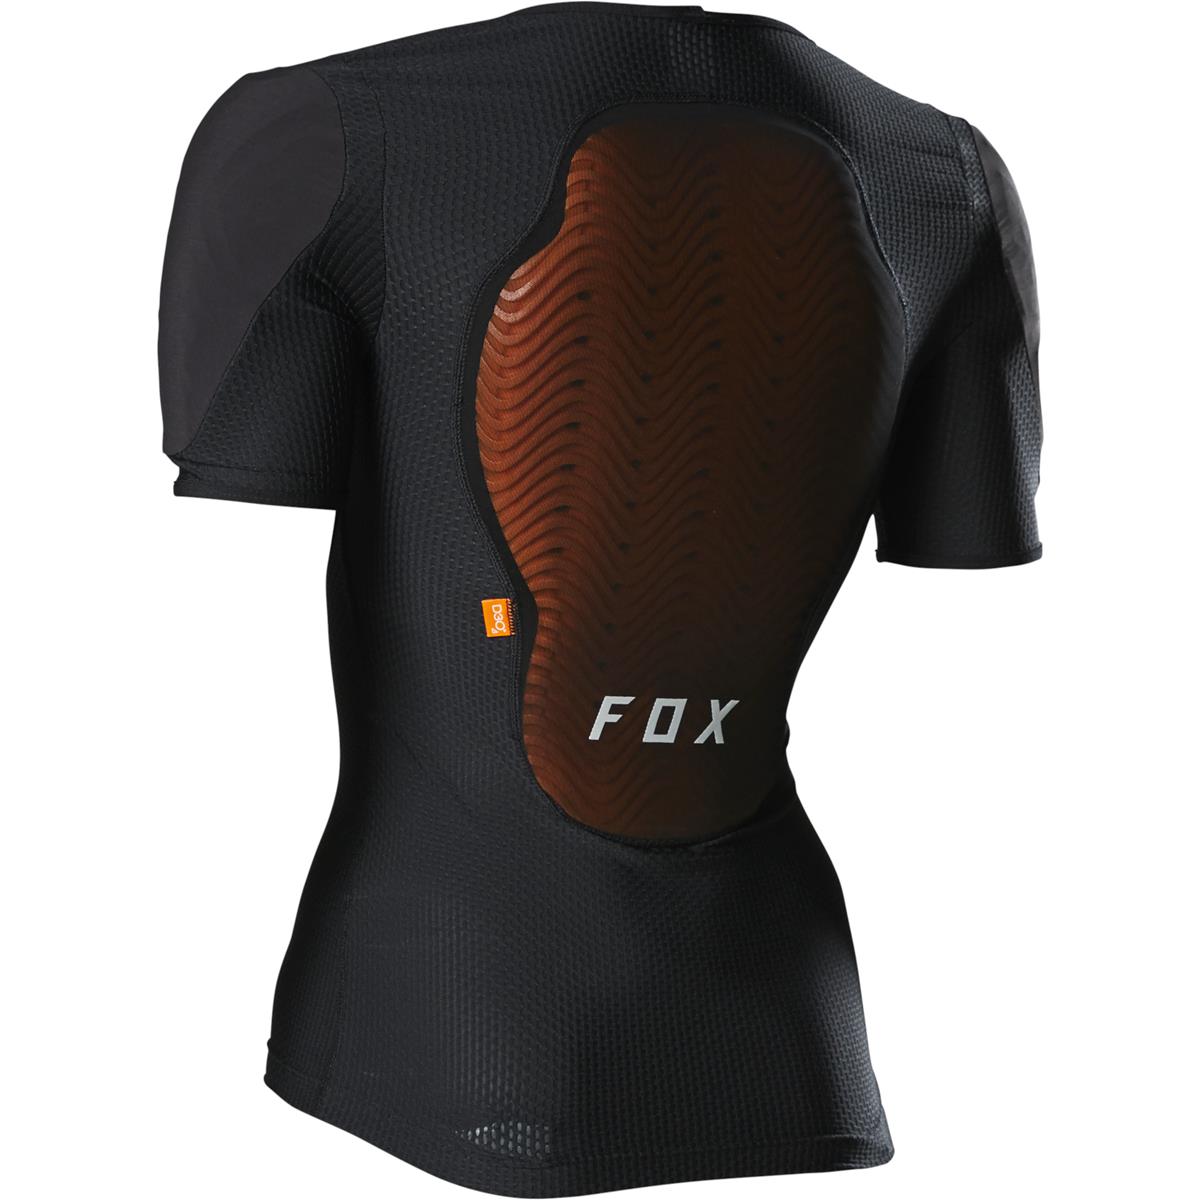 | Pro Short Protector Baseframe Offroad Fox Girls Sleeve Shirt Black Maciag